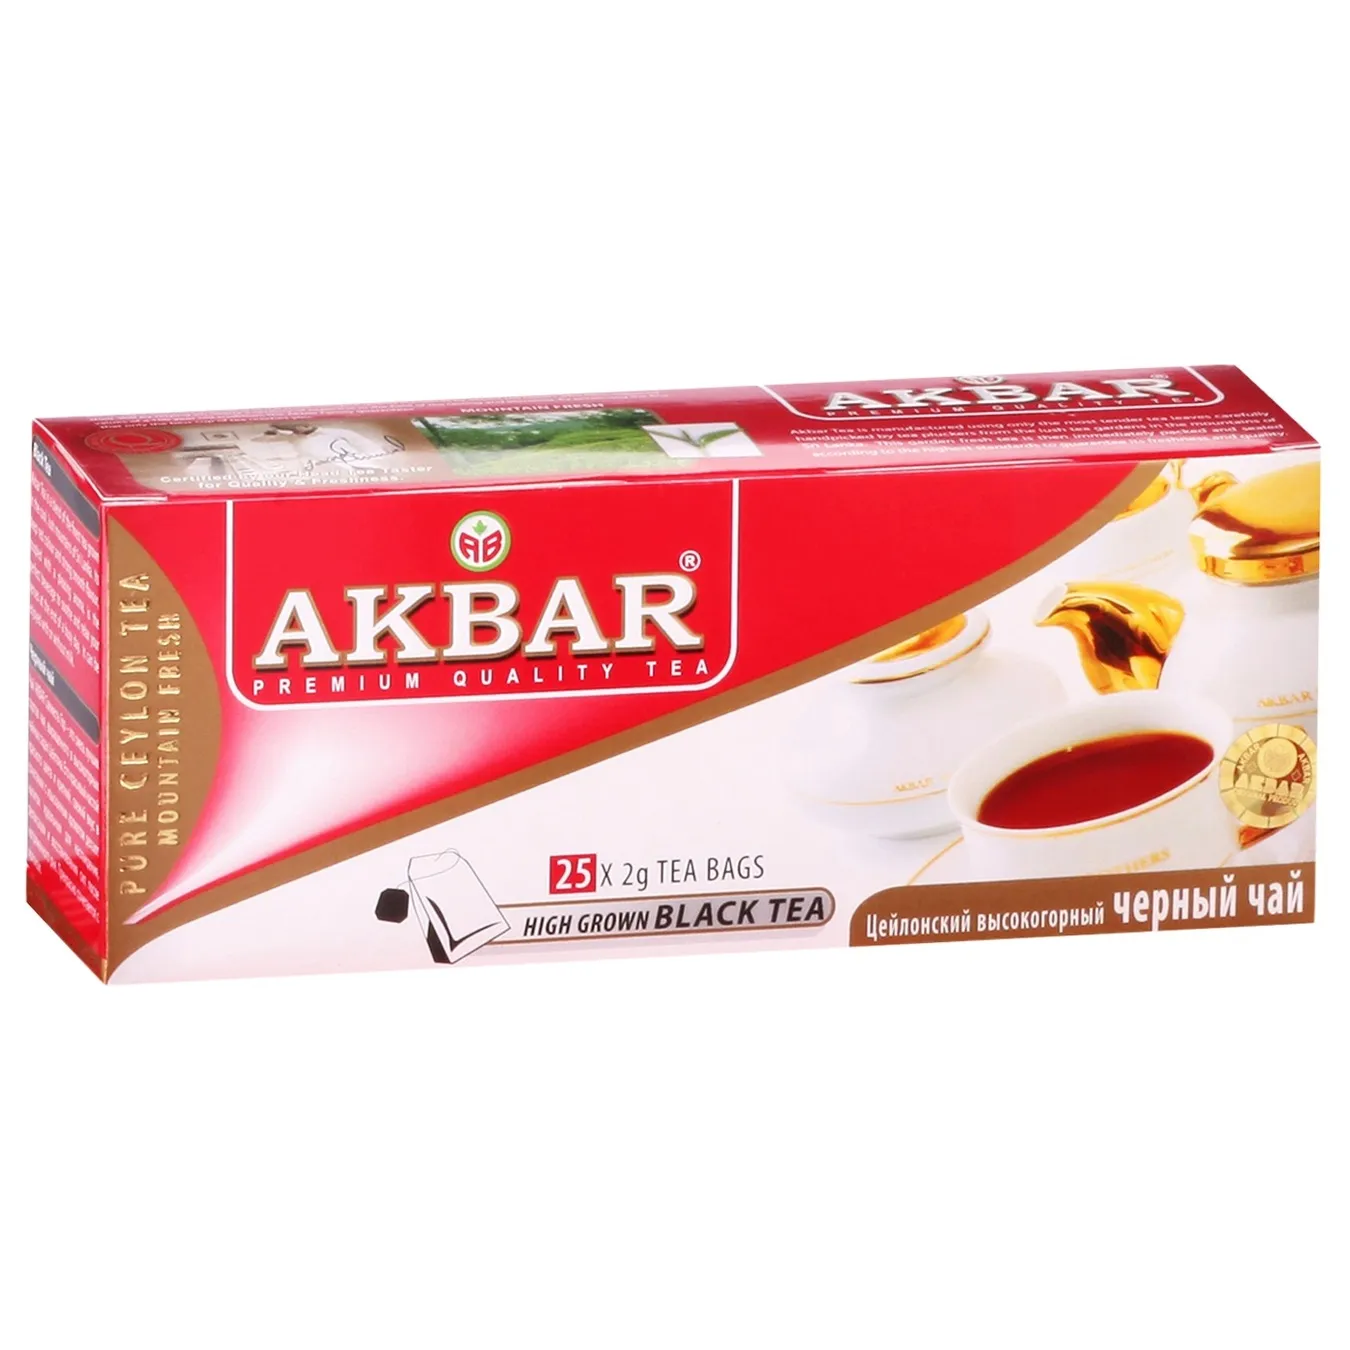 Akbar Black Tea 2g 25pcs